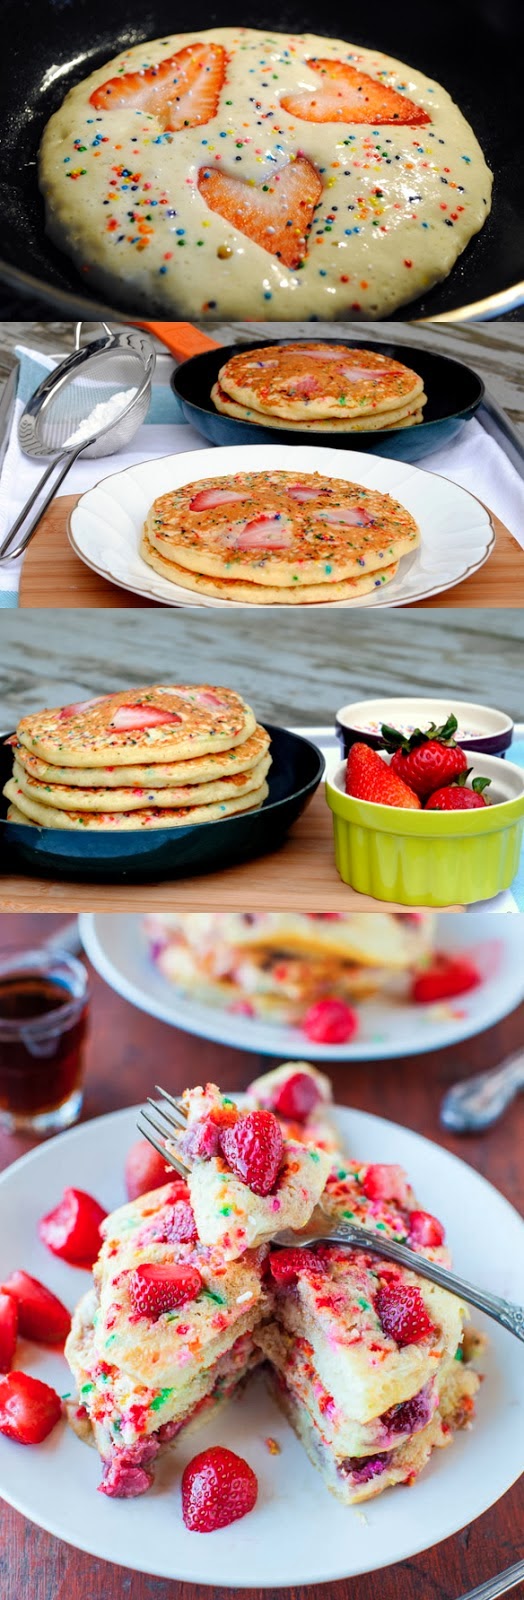 Strawberry Sprinkle Funfetti Pancakes | Family Thanksgiving Breakfast = Homemade Pancakes | Mouthwatering Pancake Recipes